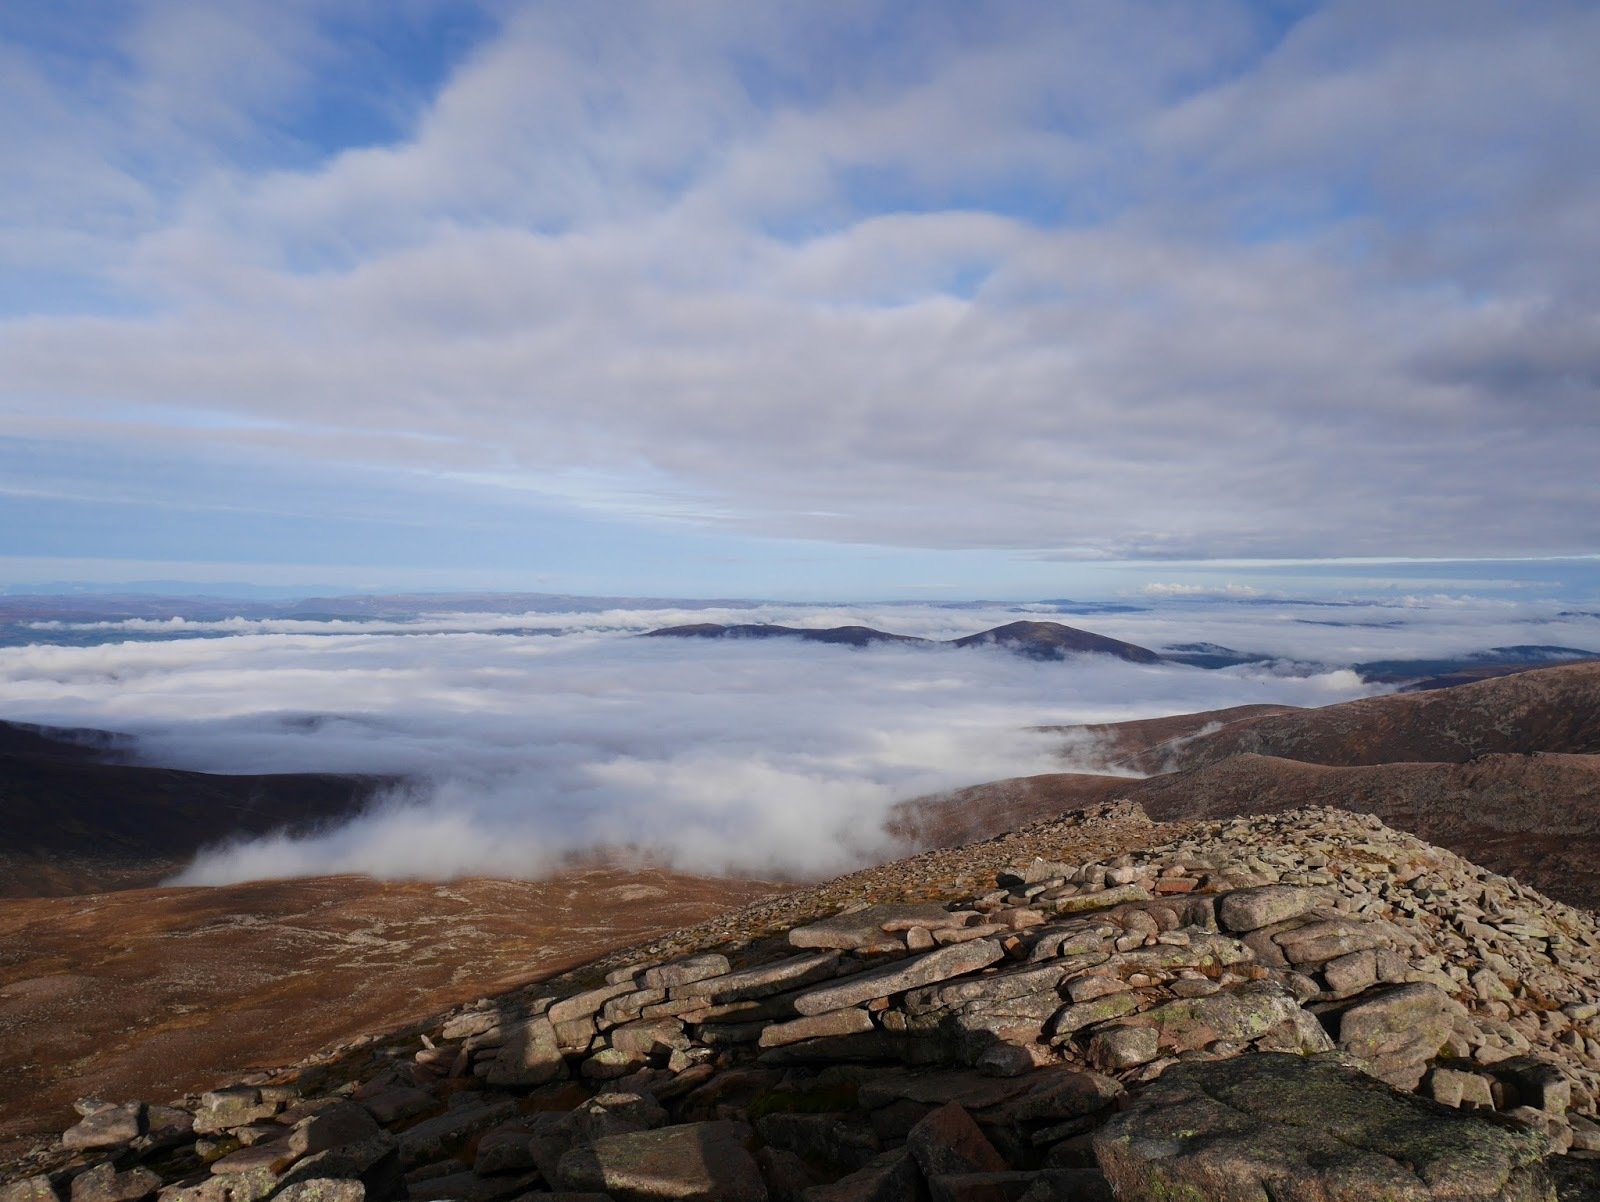 Strathspey in a cloud inversion